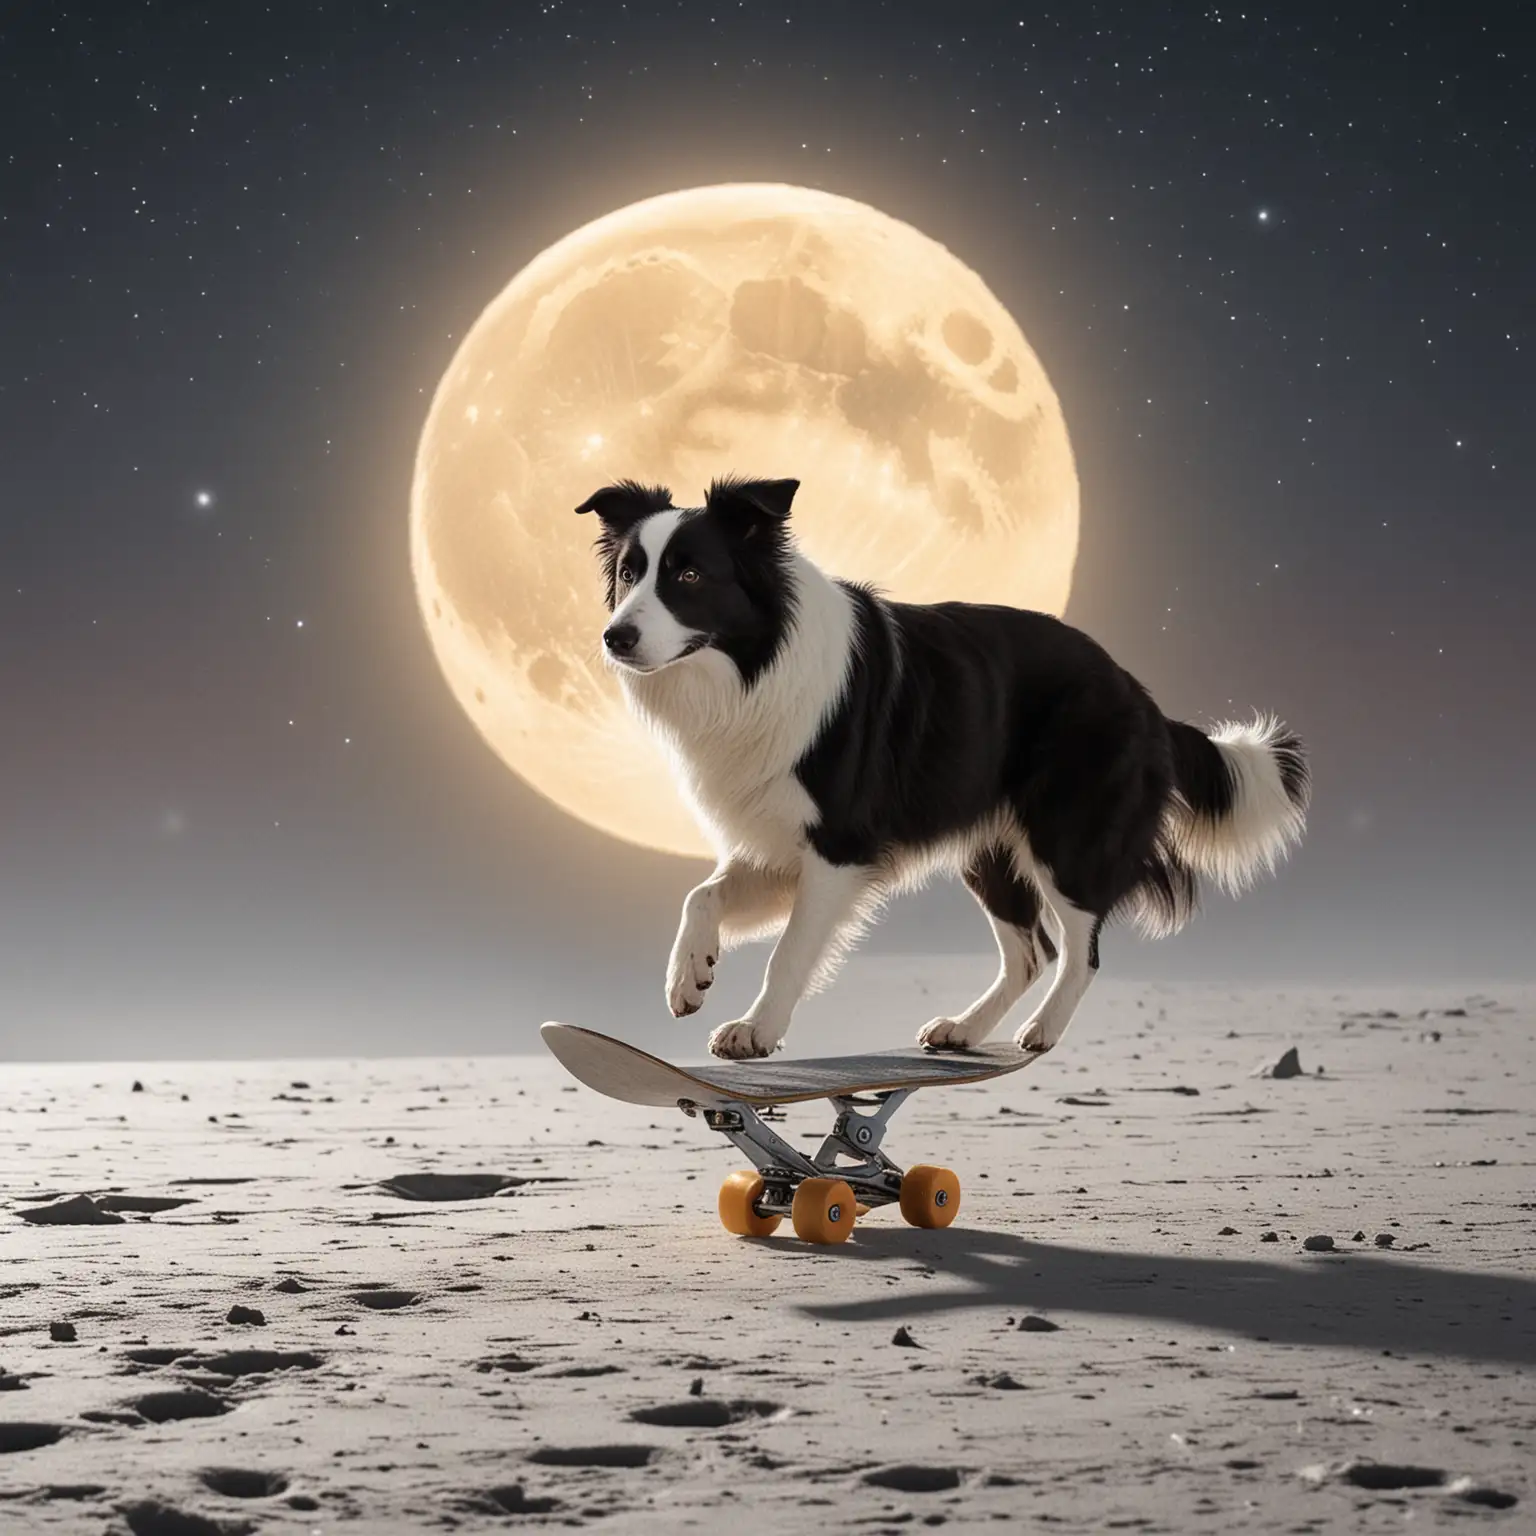 Border Collie Skating on the Moon Playful Canine Adventure in Lunar Landscape